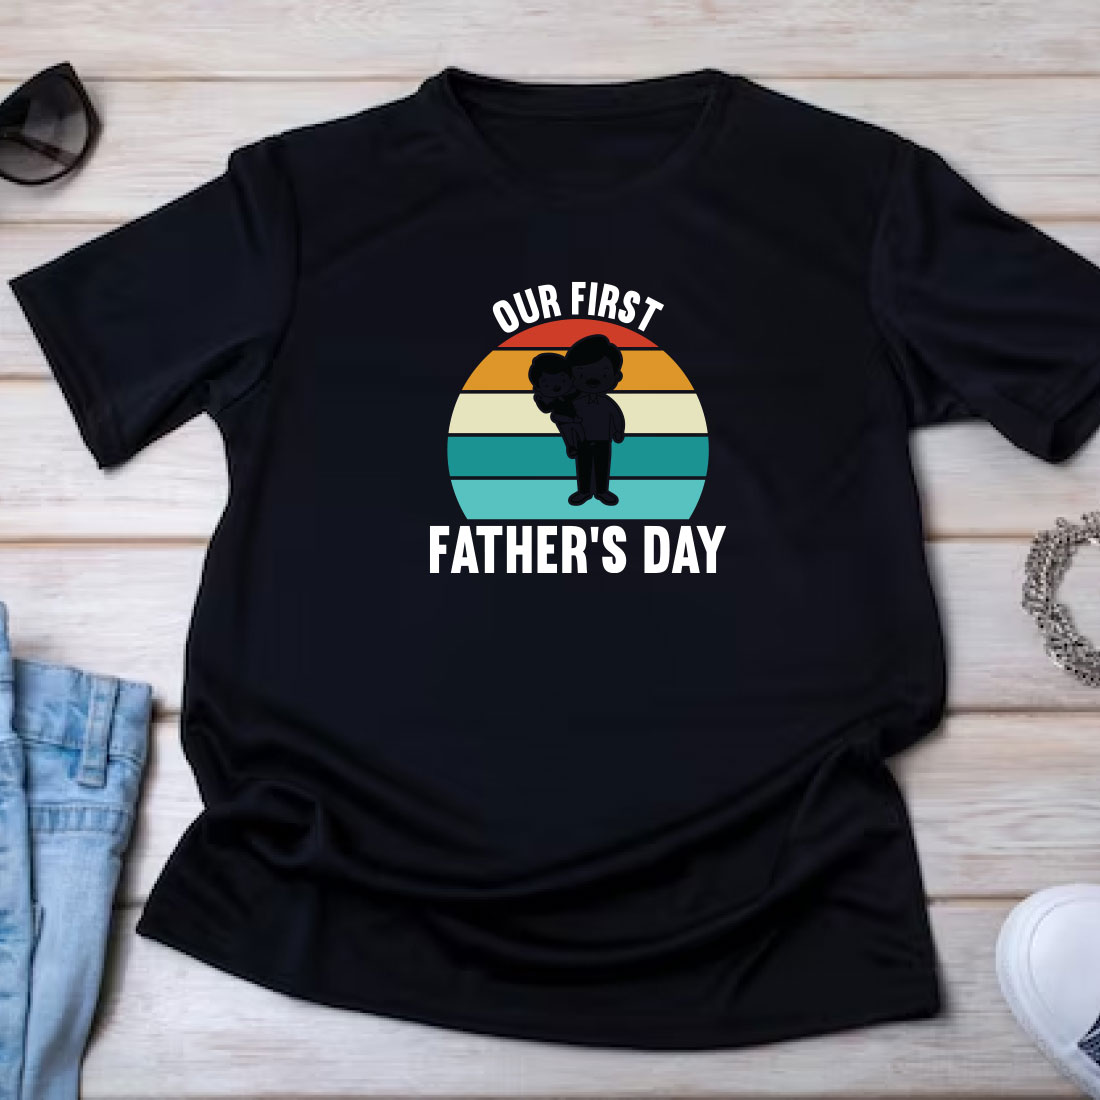 Father's Day SVG T-shirt Design Bundle Vol-28 preview image.